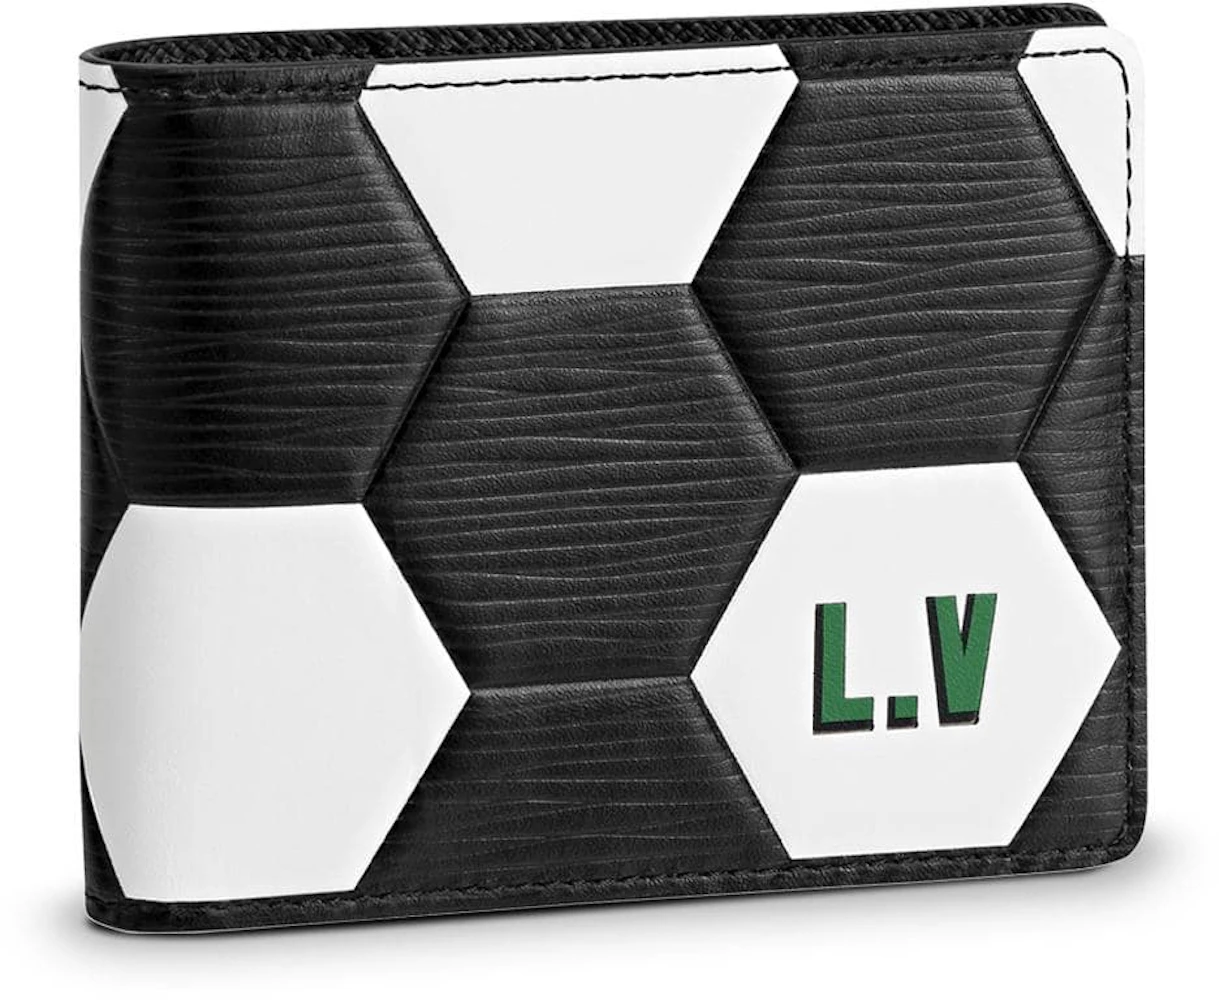 LOUIS VUITTON AMERICA'S CUP SLENDER WALLET – VLA Luxury